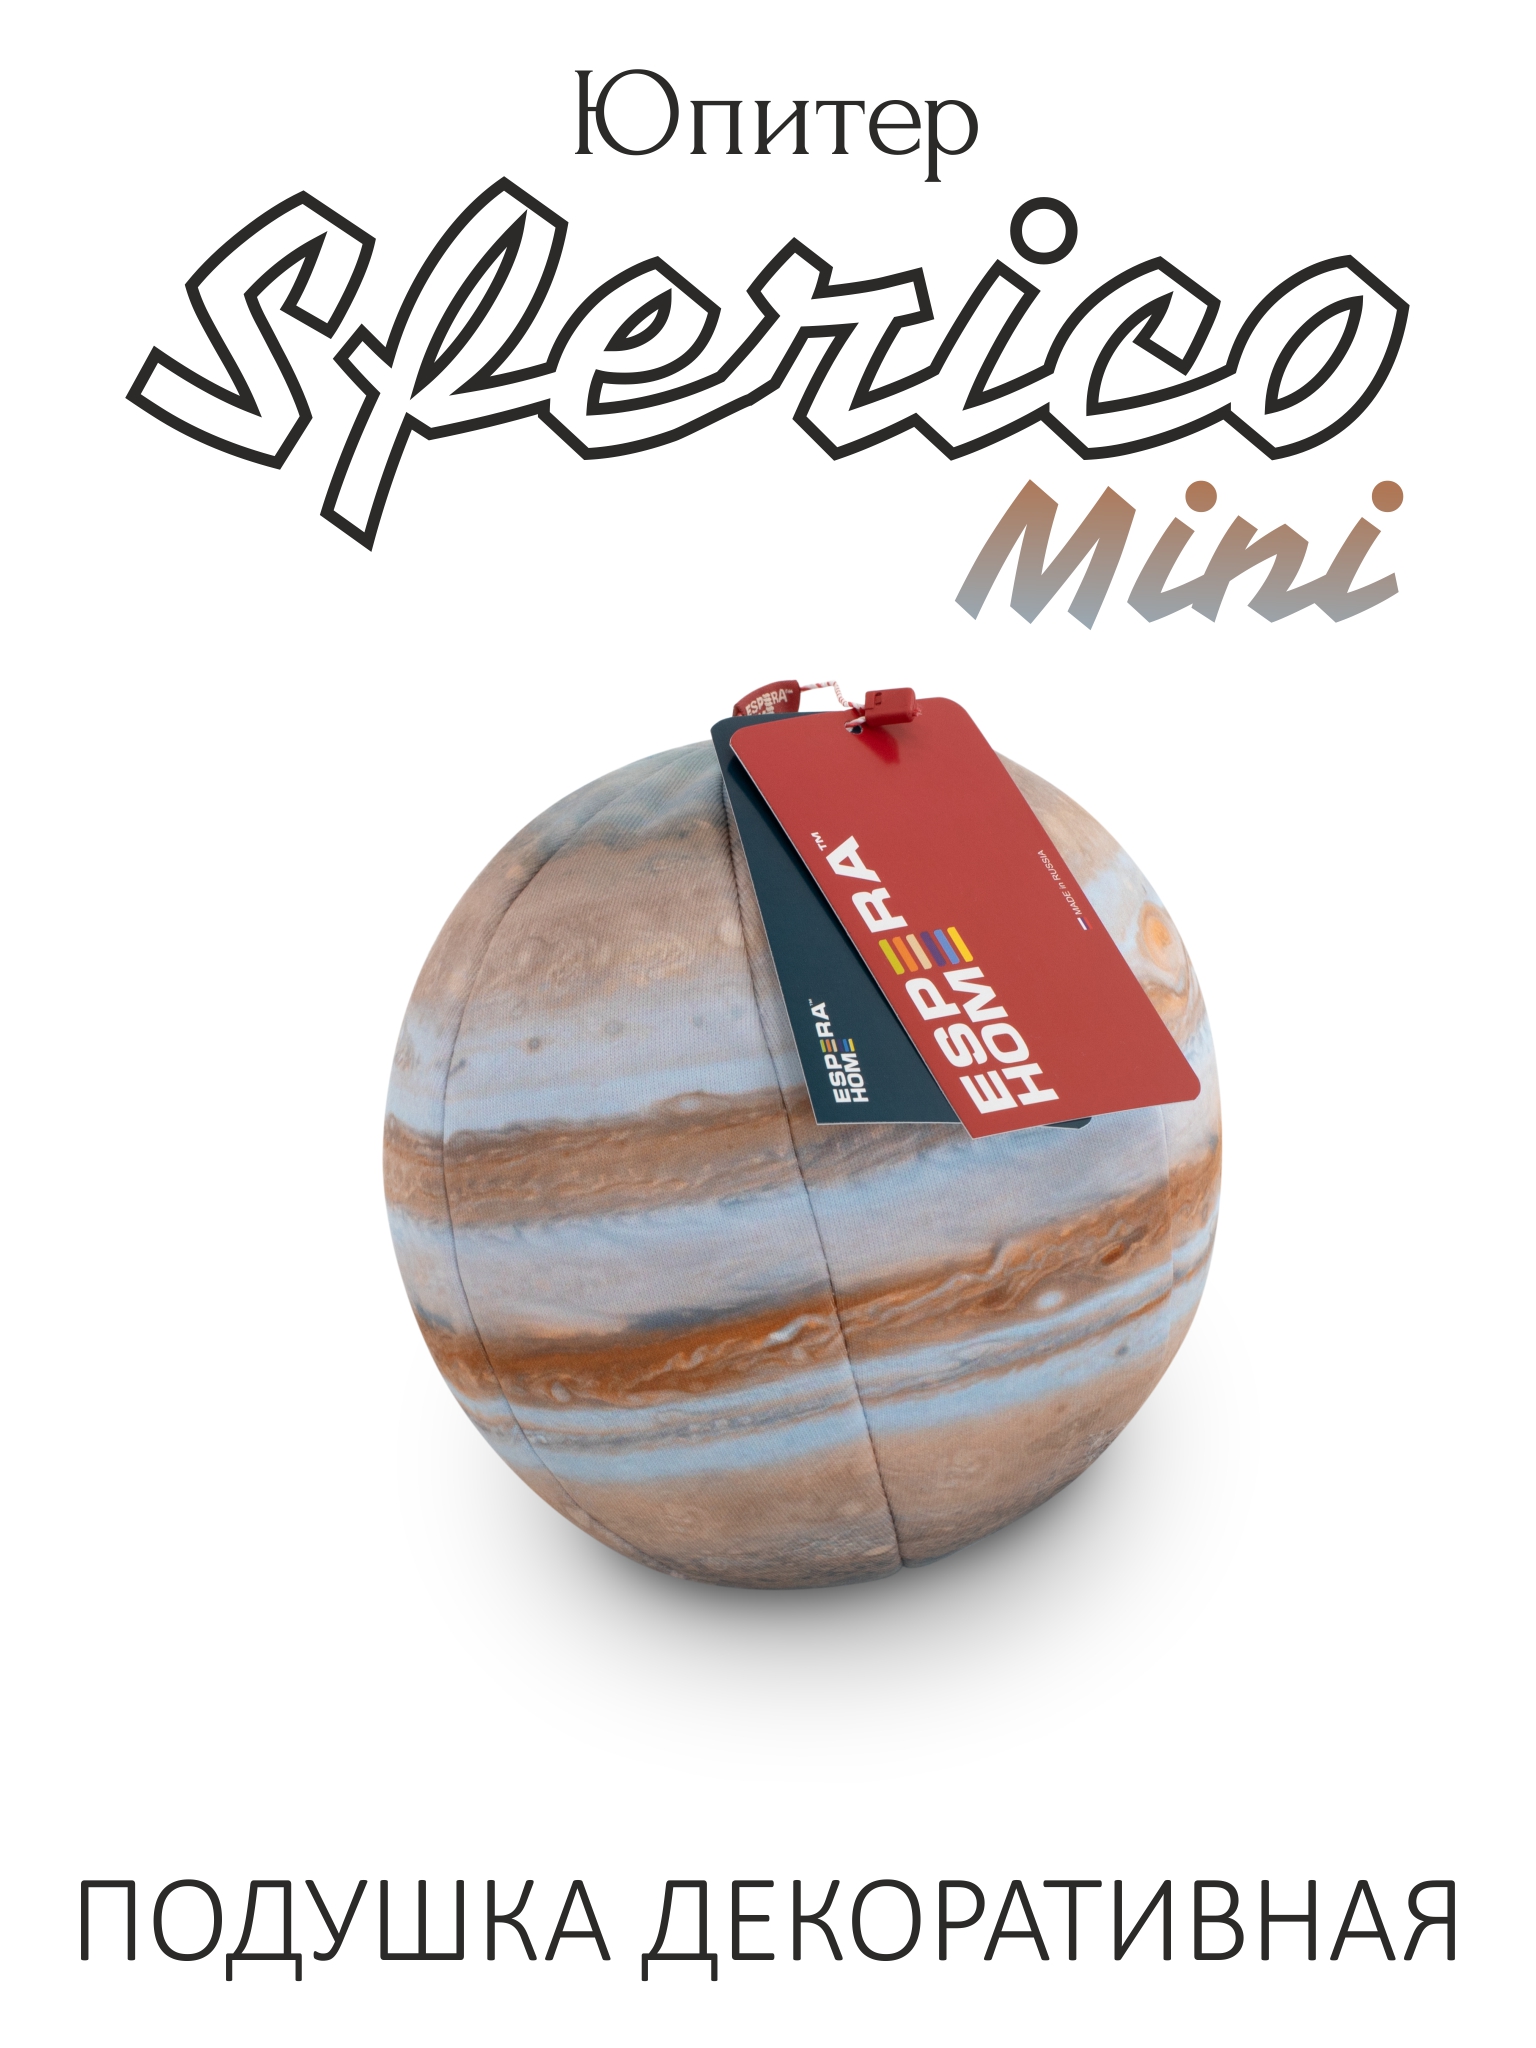 Декоративная подушка-игрушка шар • Sferico Mini / Сферико Мини • Юпитер (серия планеты)